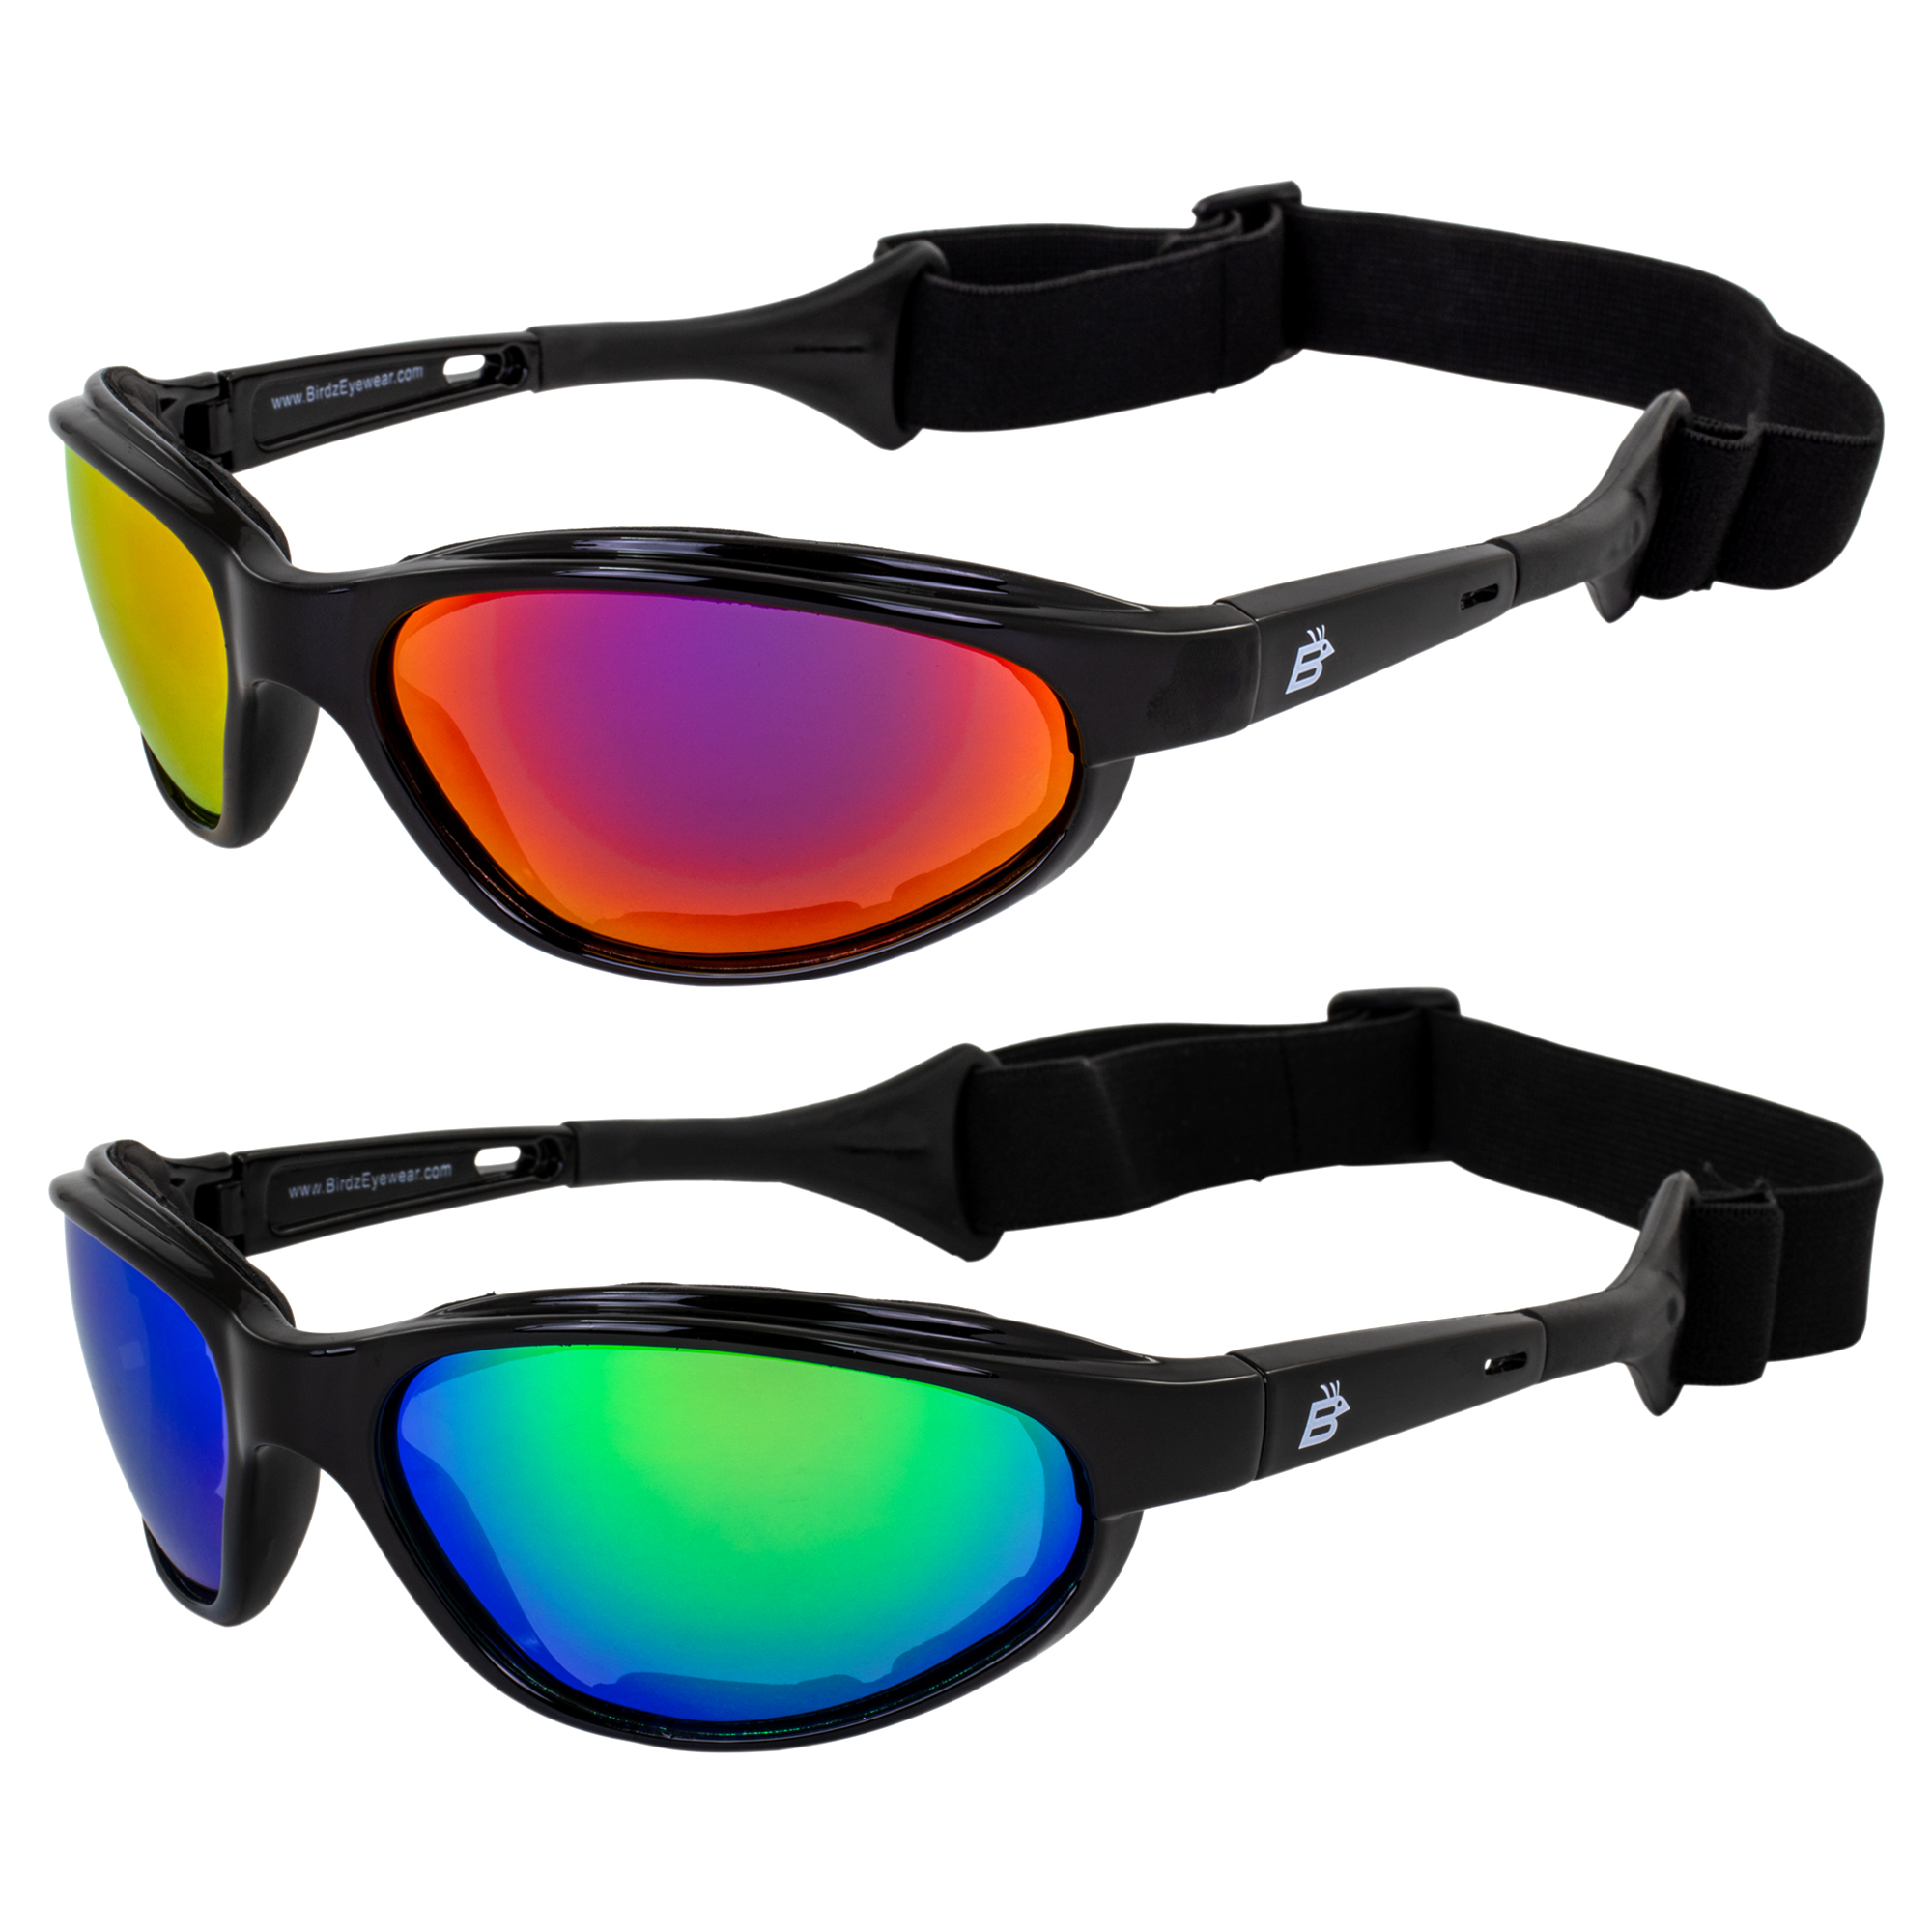 Birdz Eyewear Sail Padded Jetski Sunglasses Goggles Polarized Sports Watersports Boating Fishing for Men or Women 2 Pairs Black Frame w/Red & Green Mirror Lenses - image 1 of 7